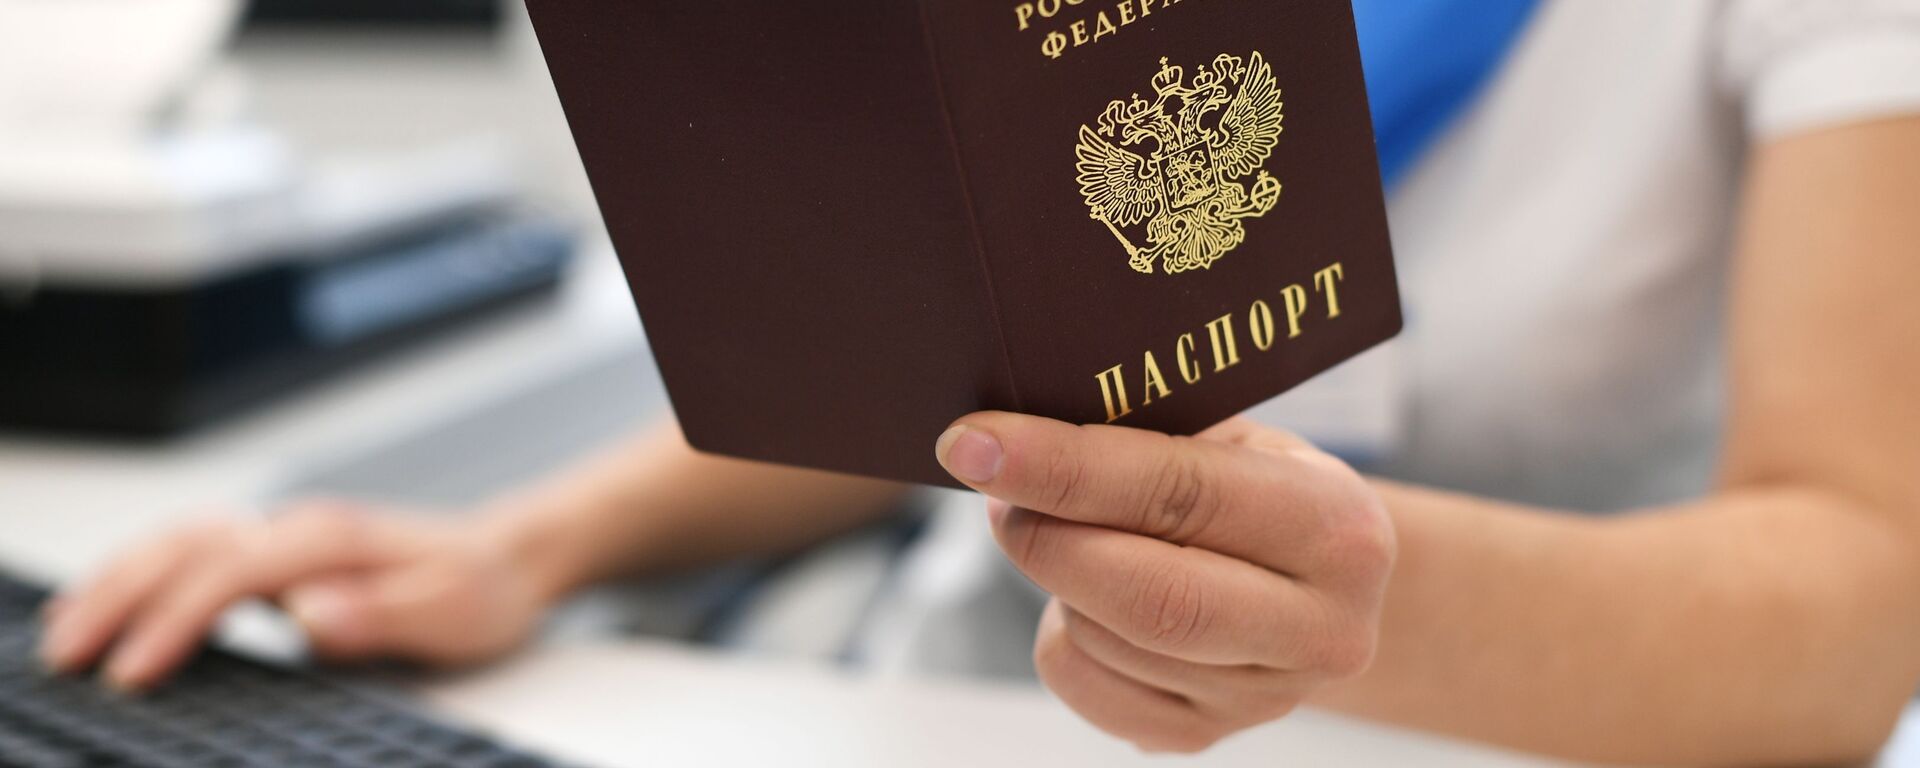 Паспорт гражданина РФ. Архивное фото - Sputnik Кыргызстан, 1920, 07.04.2021